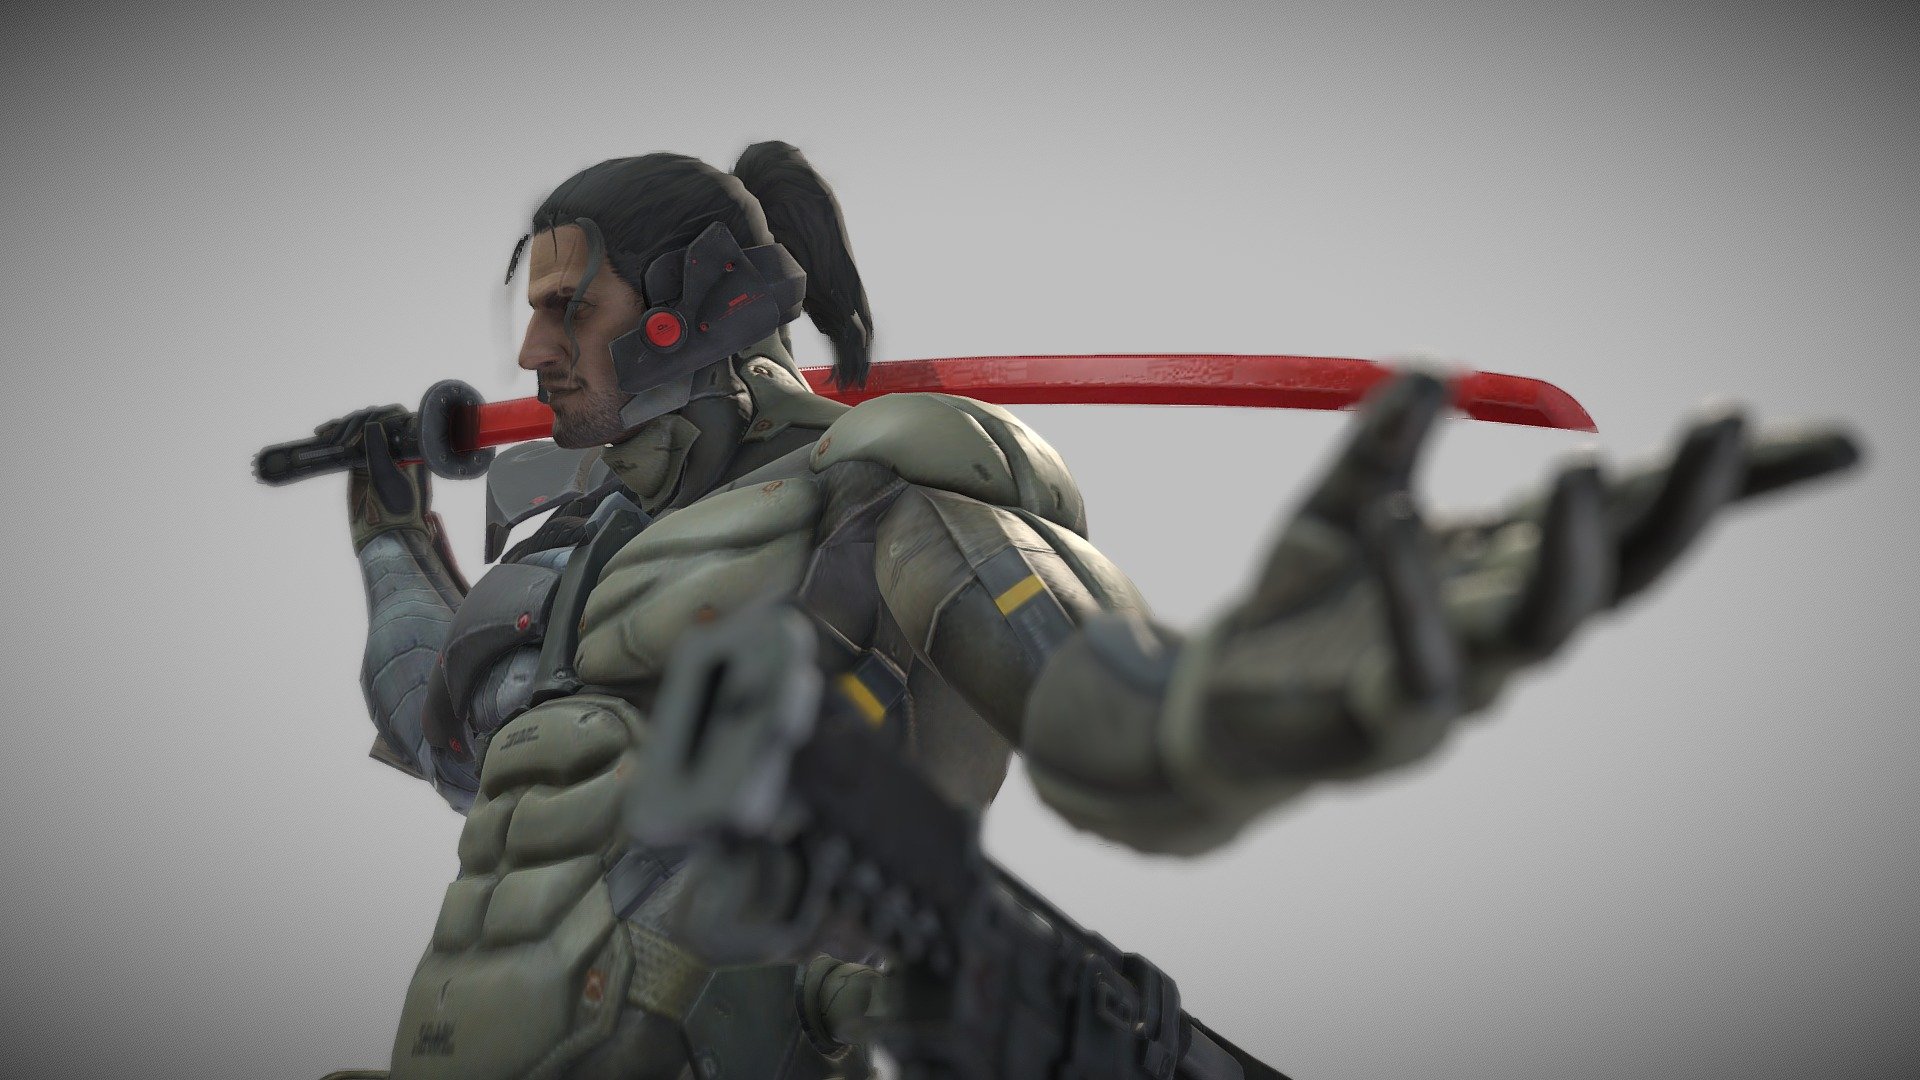 Metal Gear Rising: Sam Boss Fight HD 